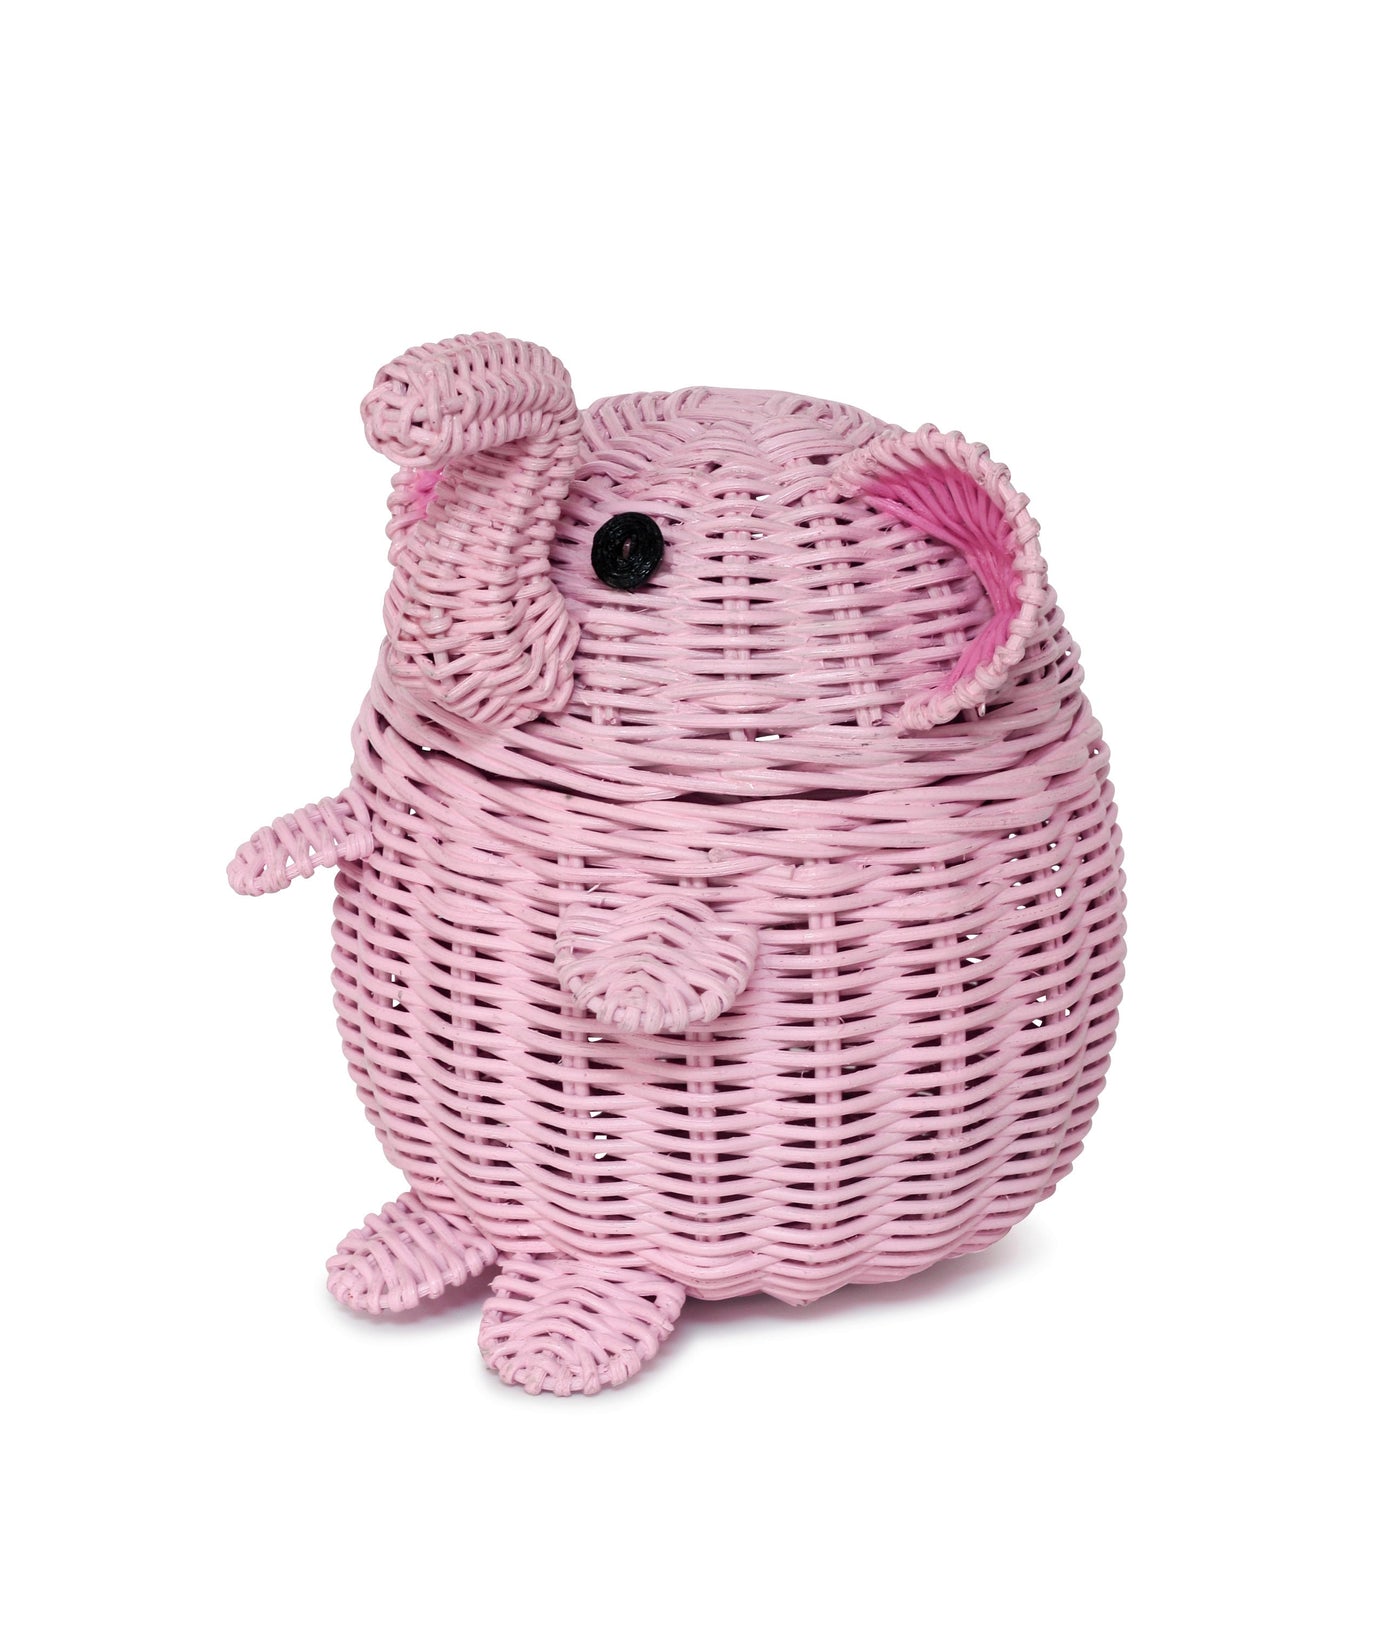 Pink Elephant Rattan Storage Basket With Lid Hand Woven Shelf Organizer Cute Handmade Gift Wicker